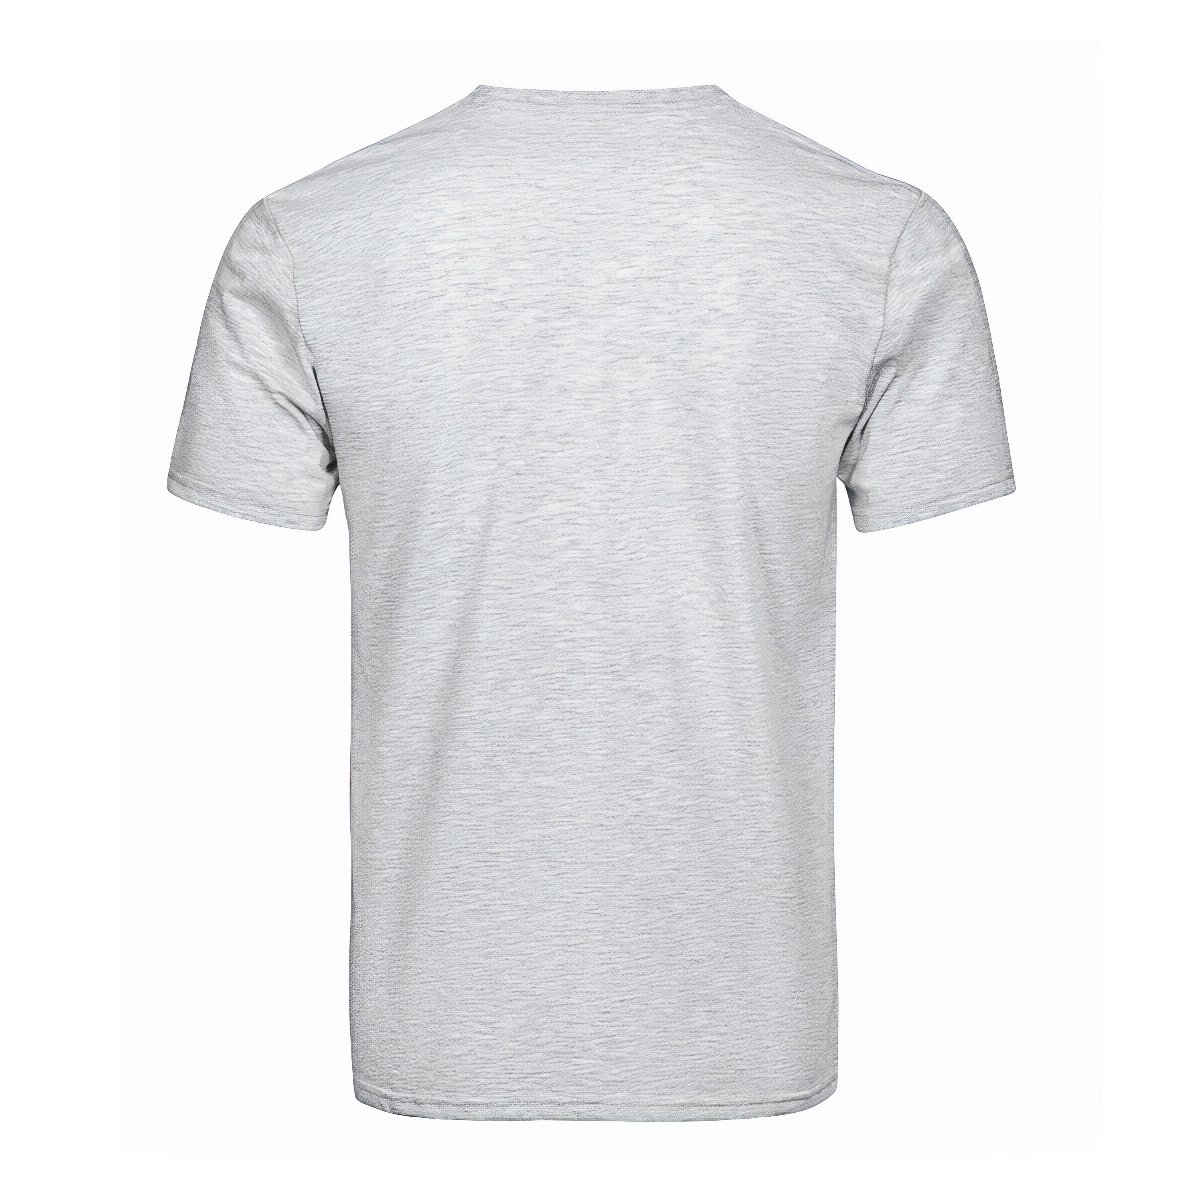 Gayre Tartan Crest T-shirt - I'm not yelling style